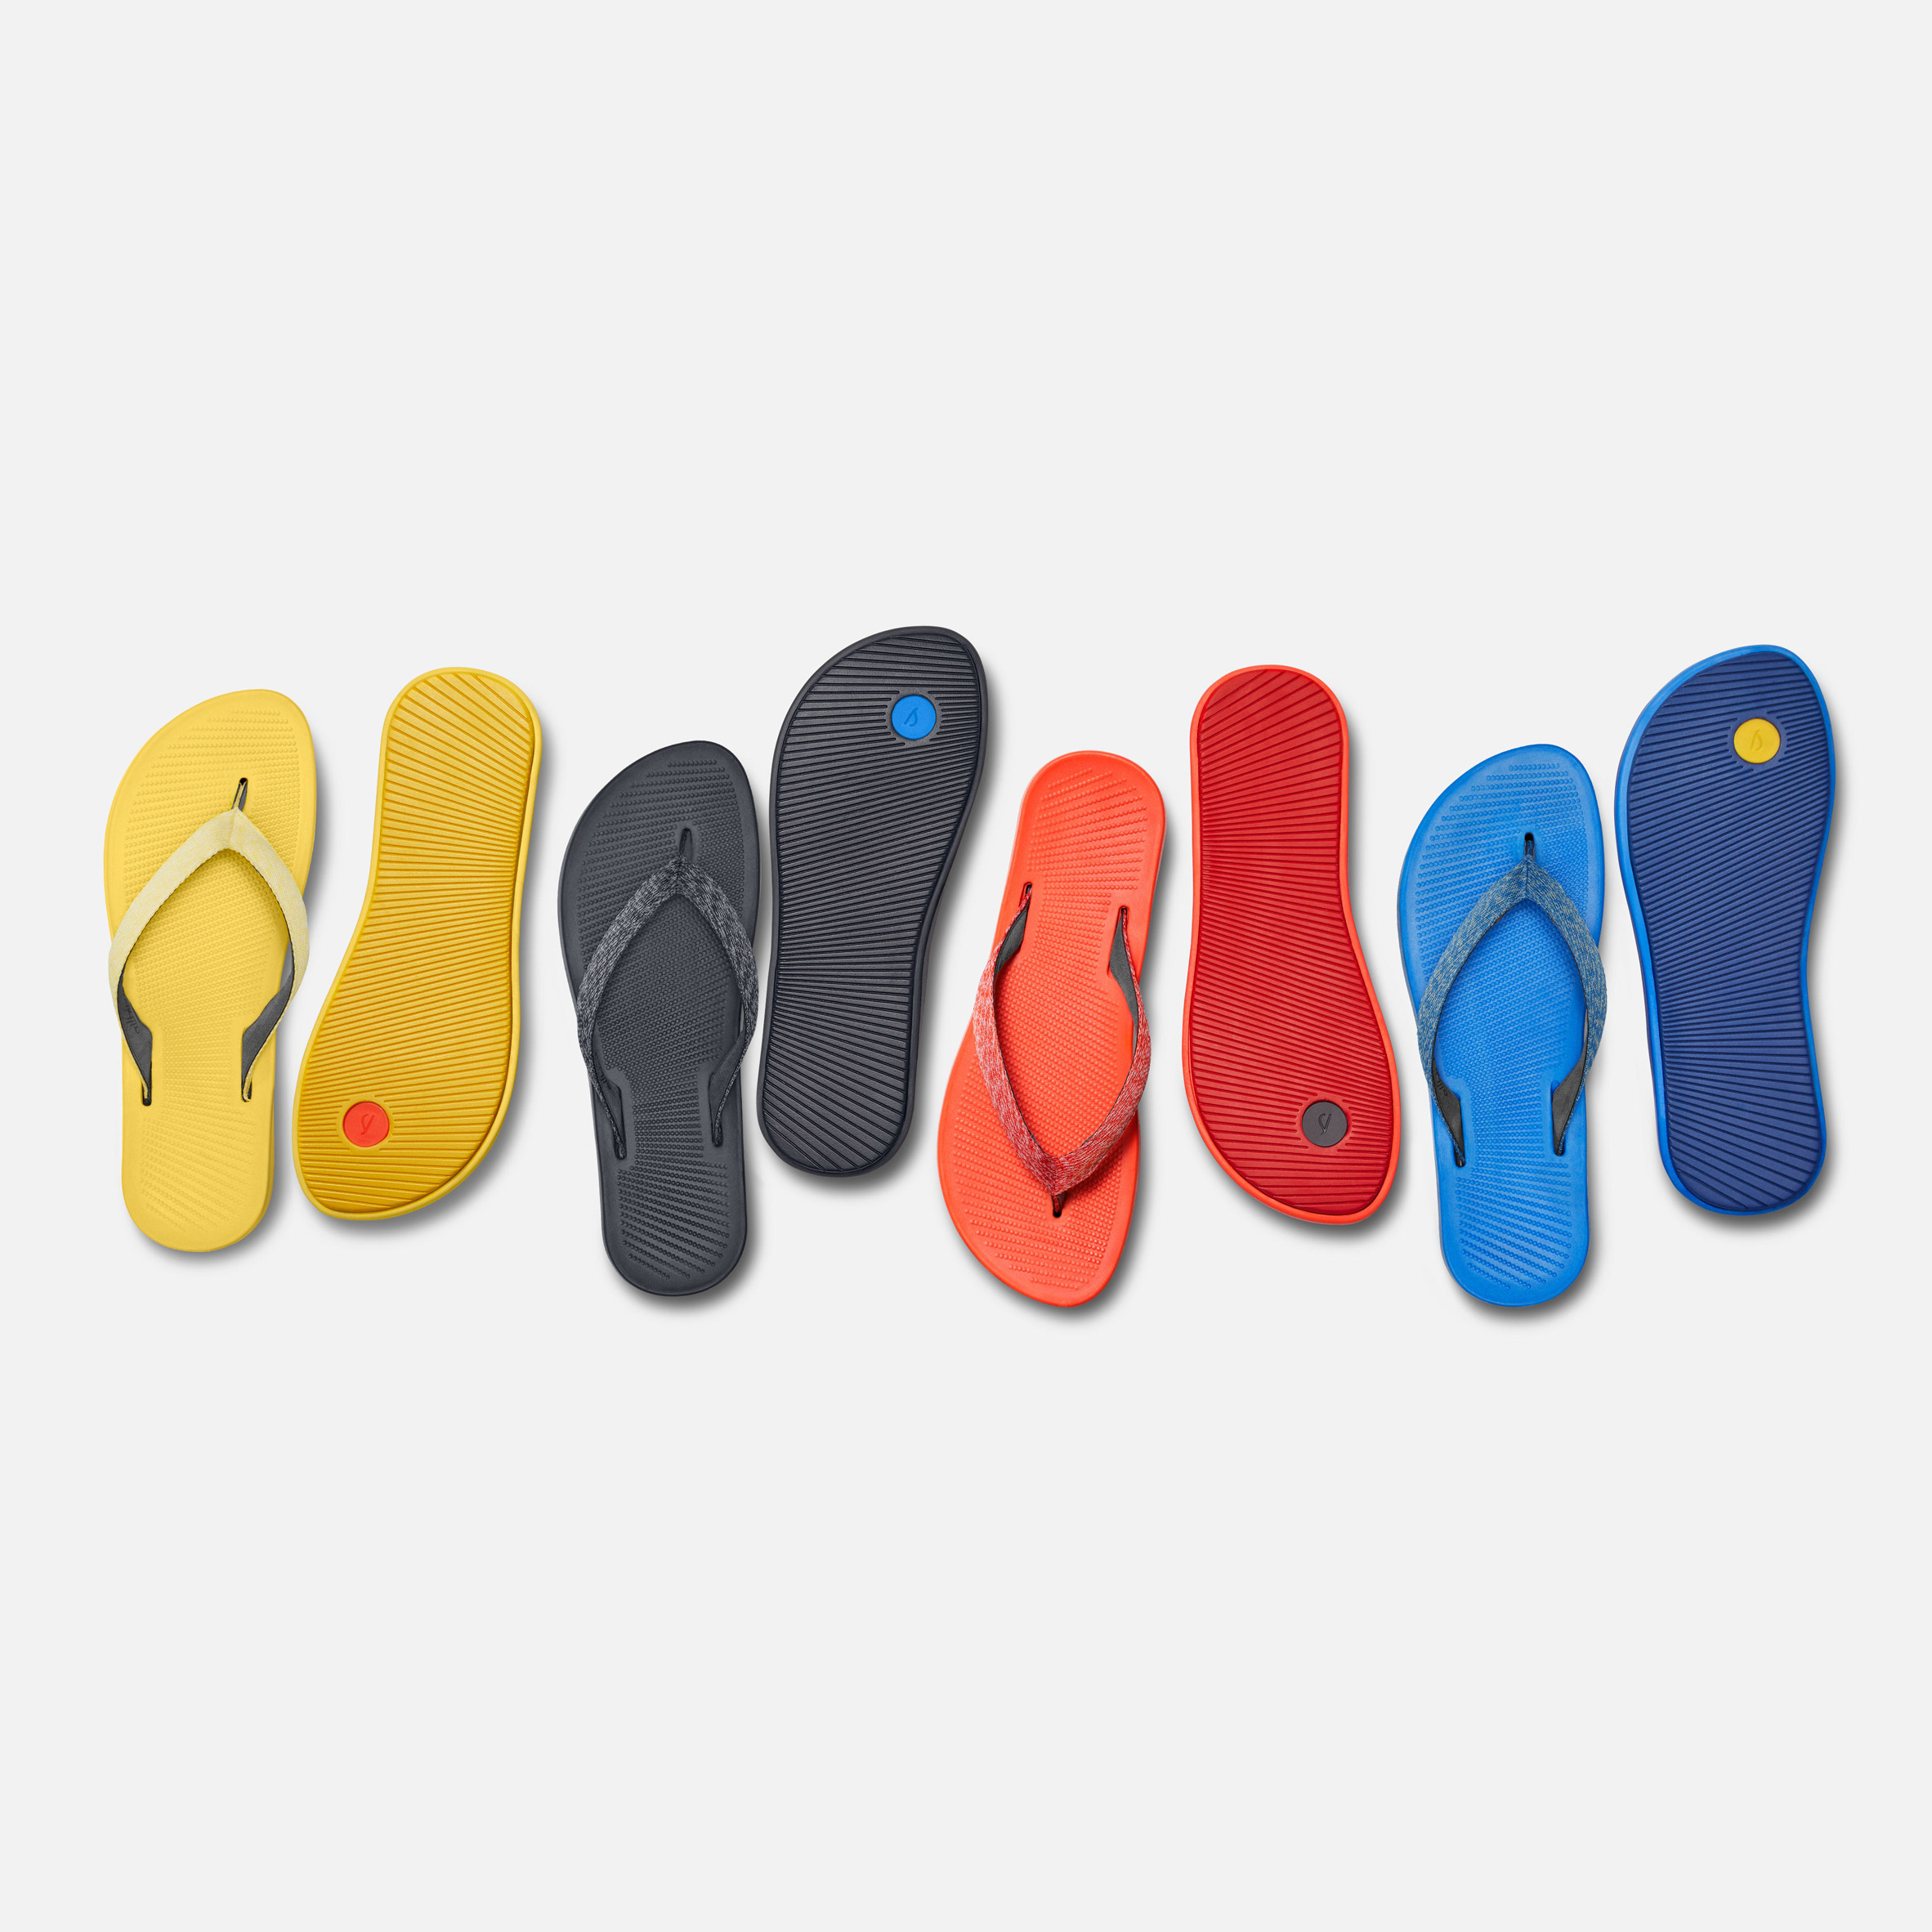 Flip flops with sugar-cane soles 